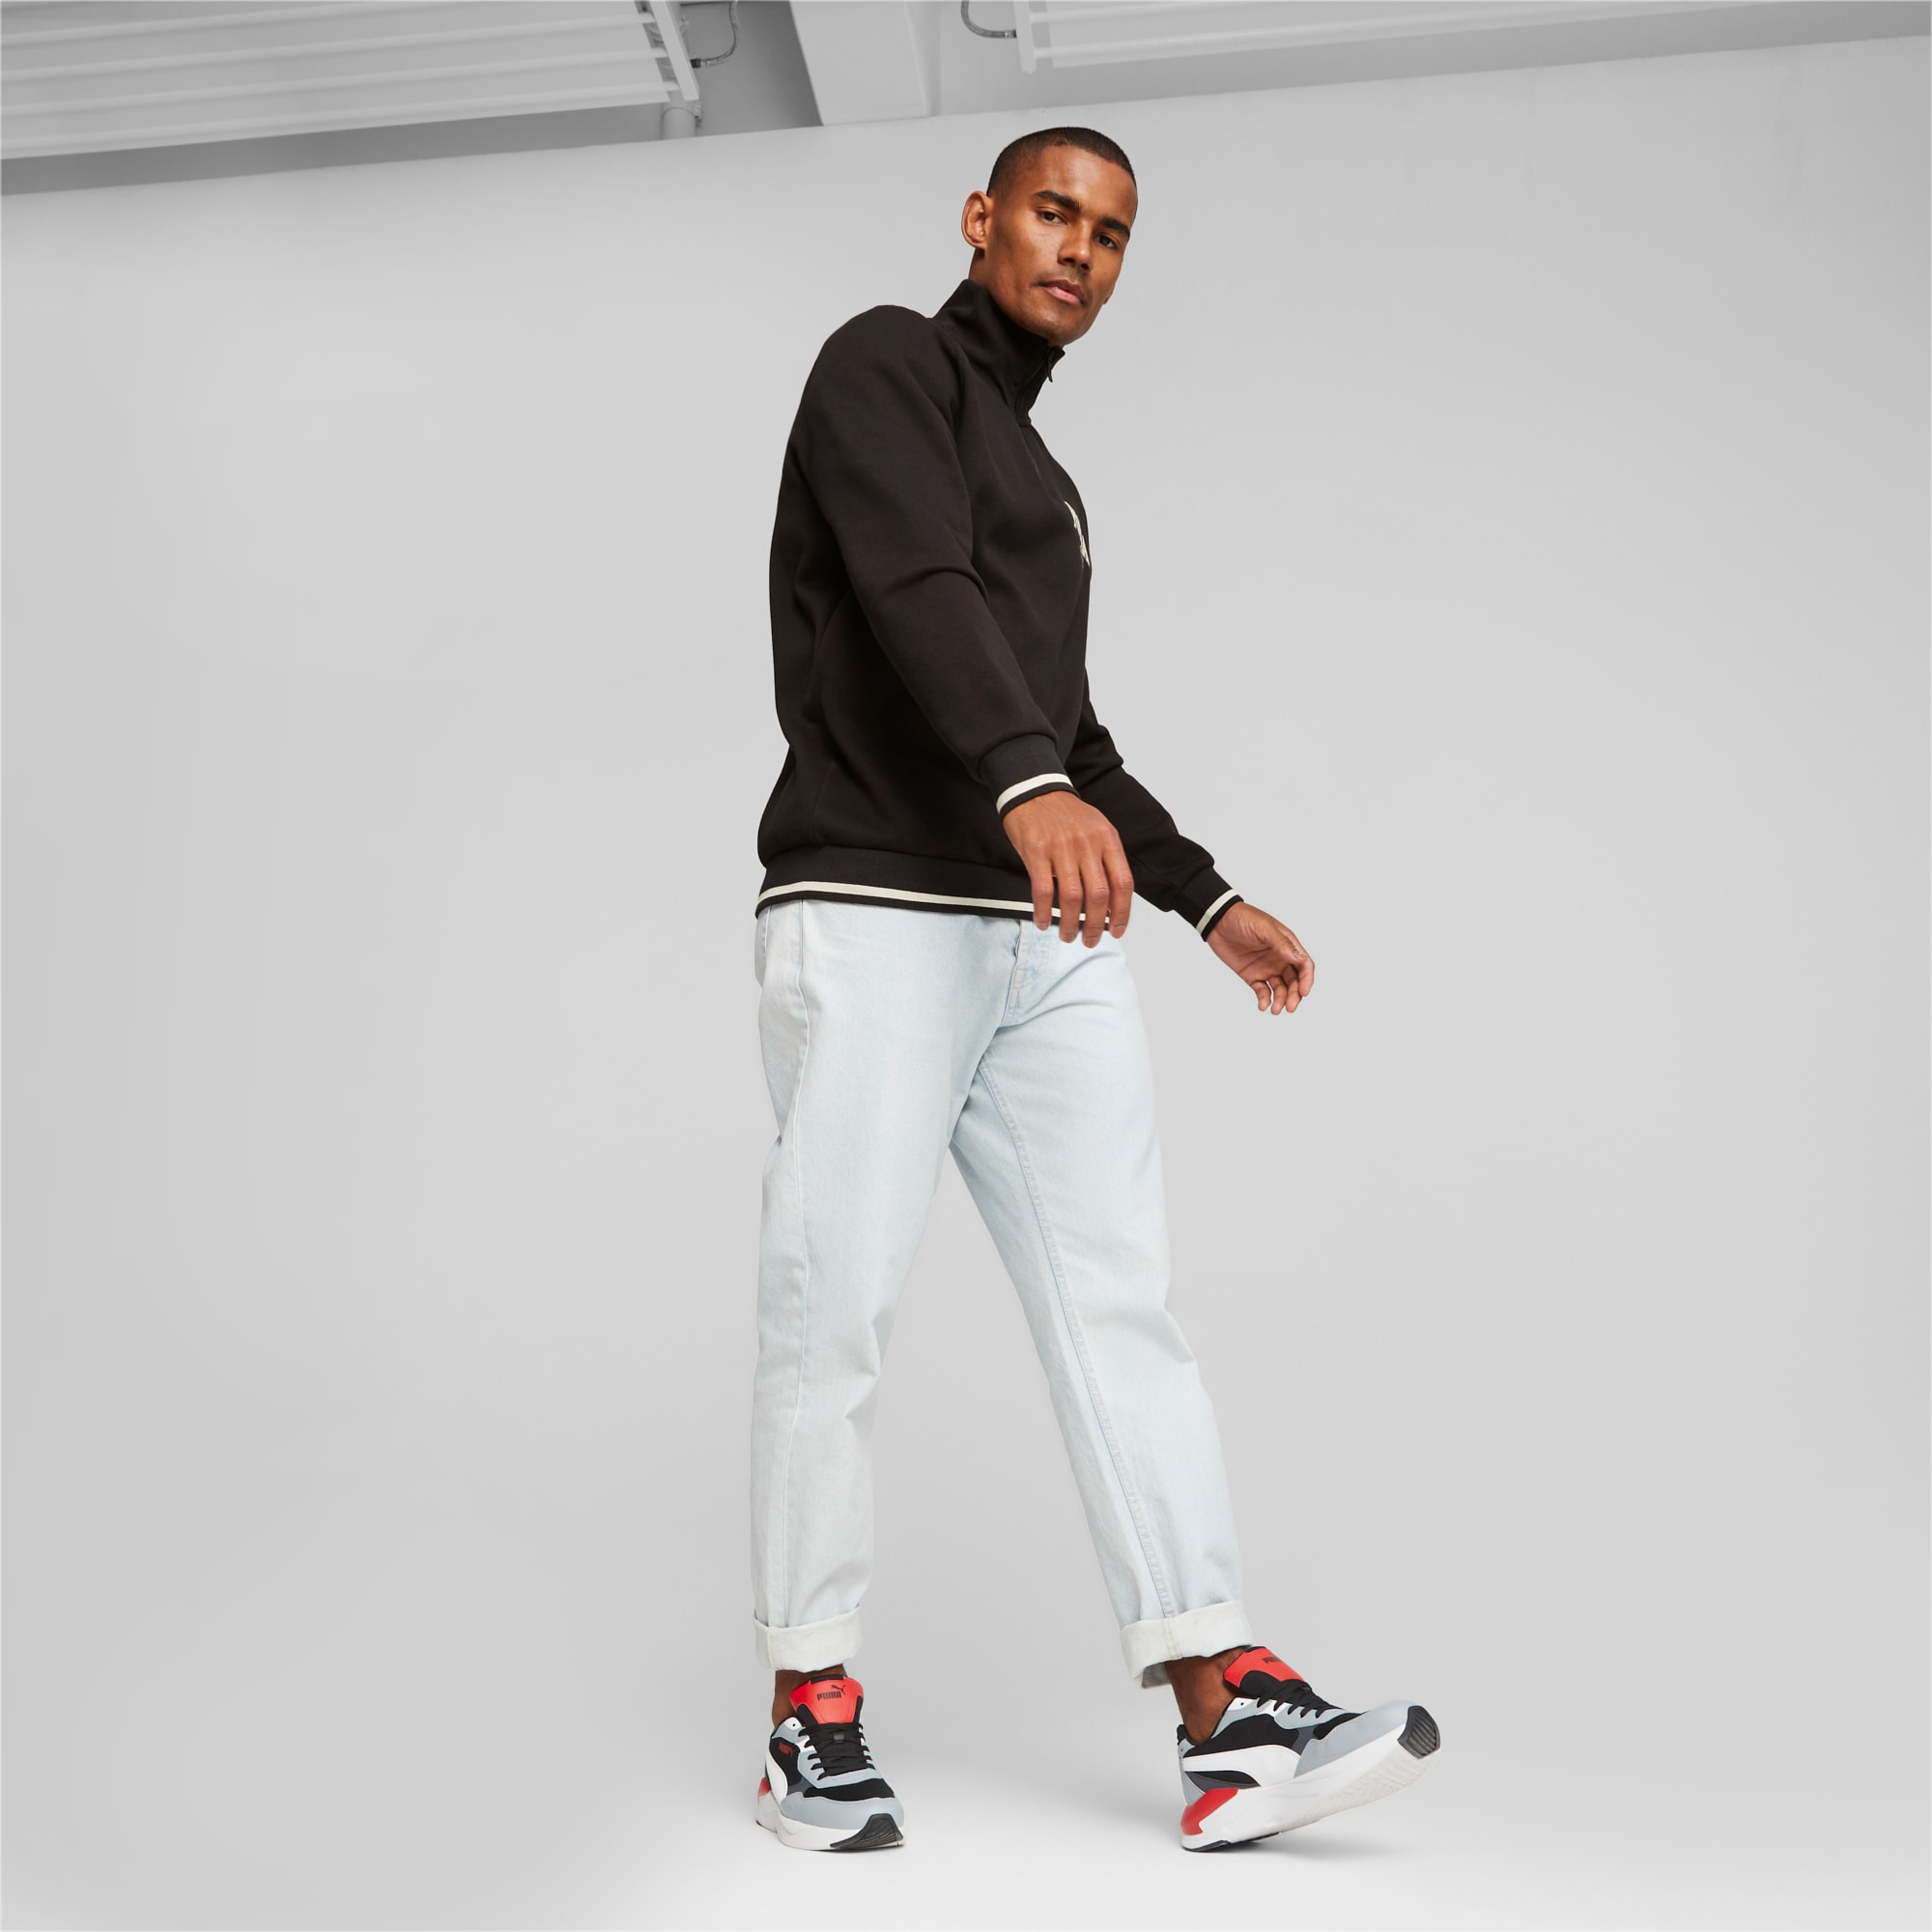 PUMA Chaussure Sneakers X-Ray Speed Lite, Noir/Gris/Blanc